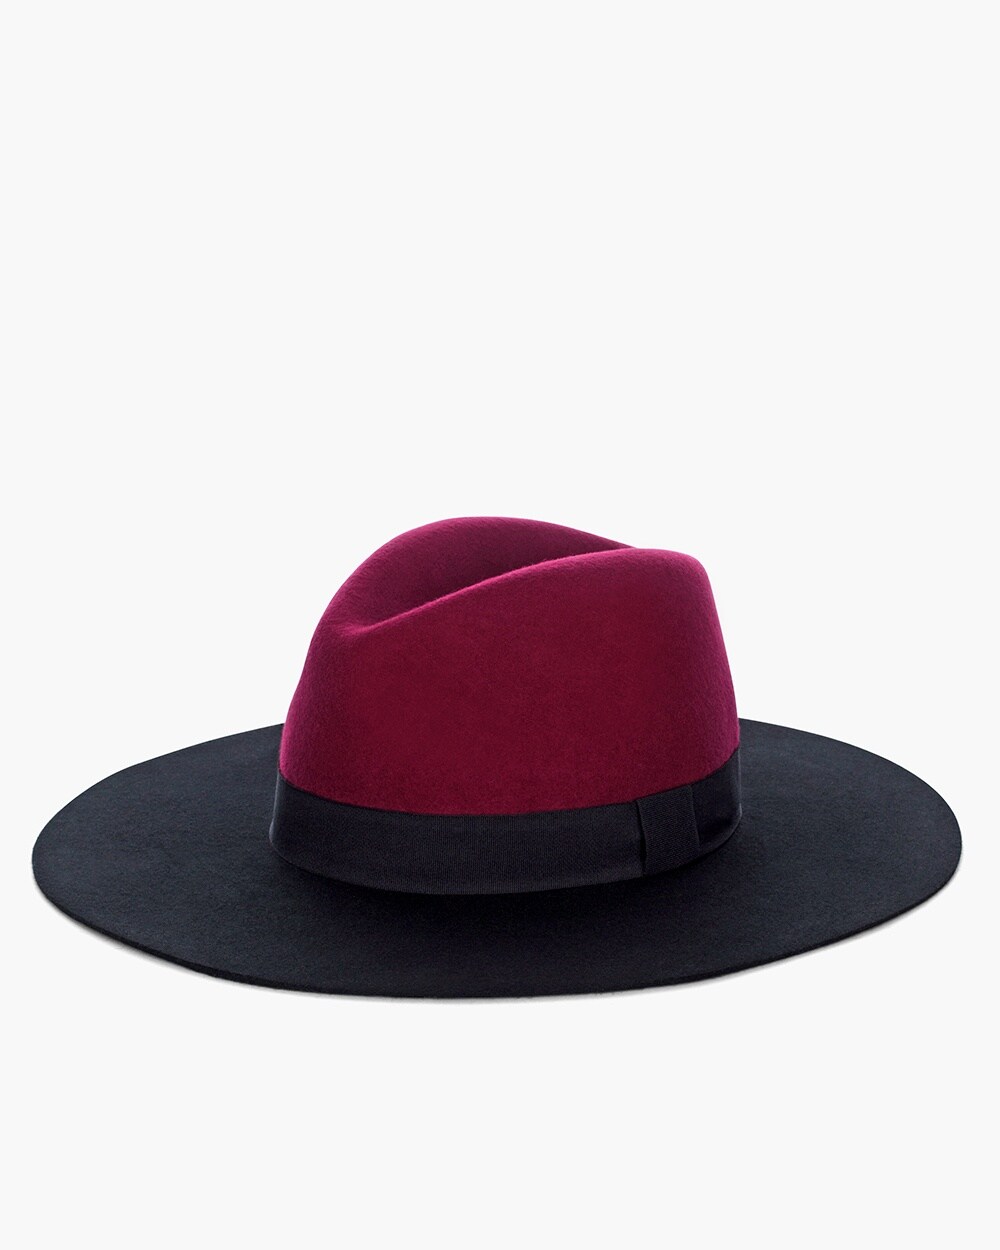 Black and Merlot Bi-Color Hat